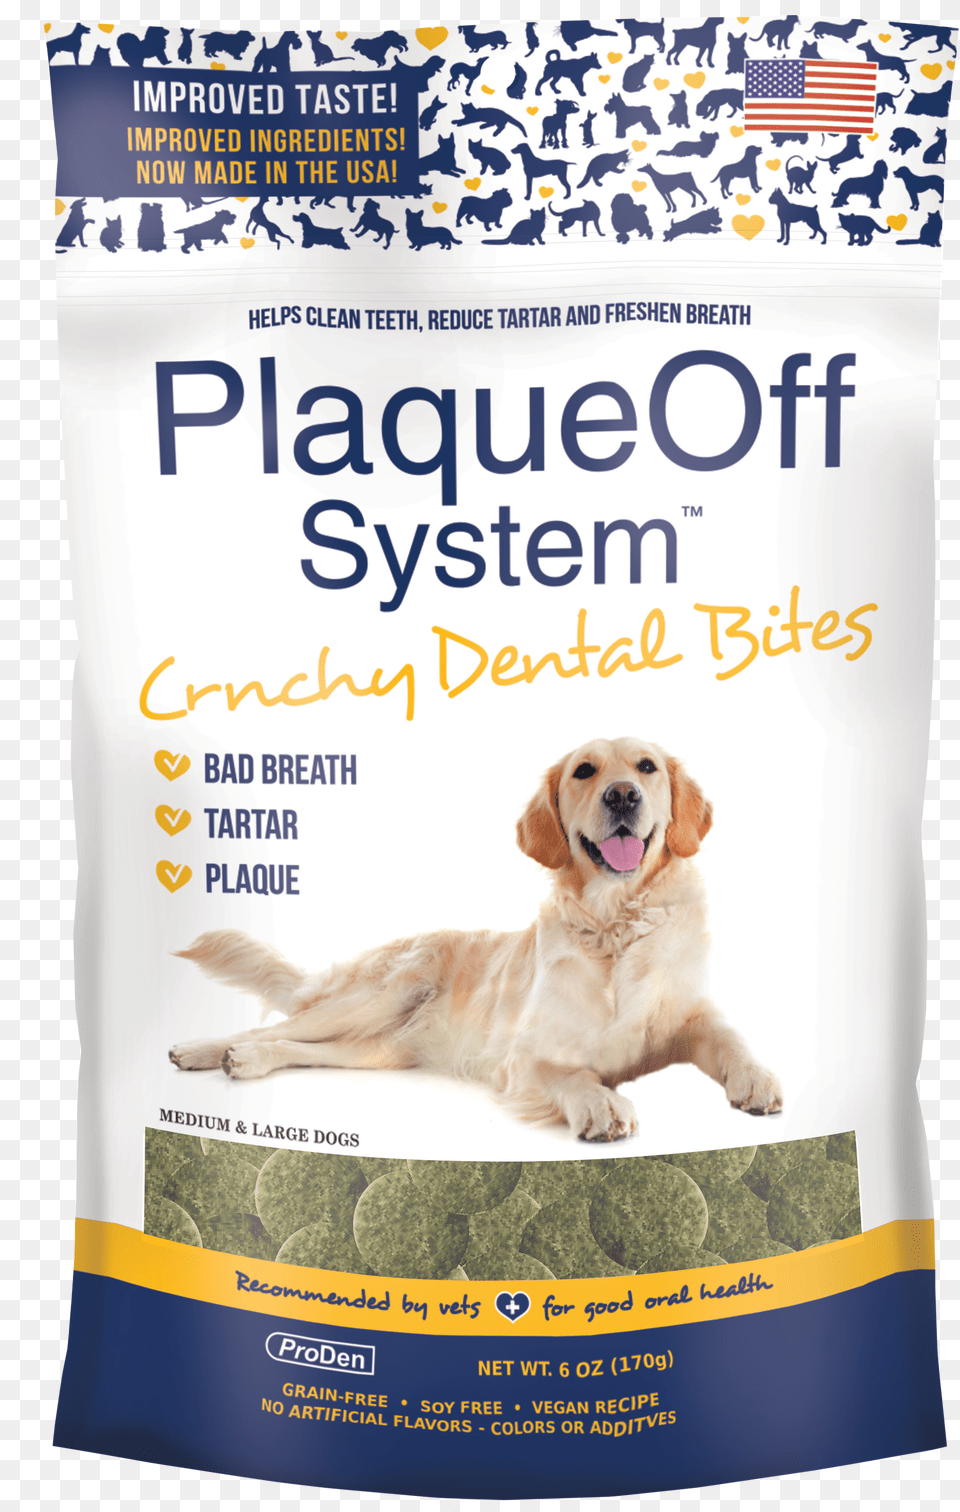 Proden Plaqueoff Dental Bones, Advertisement, Animal, Canine, Dog Png